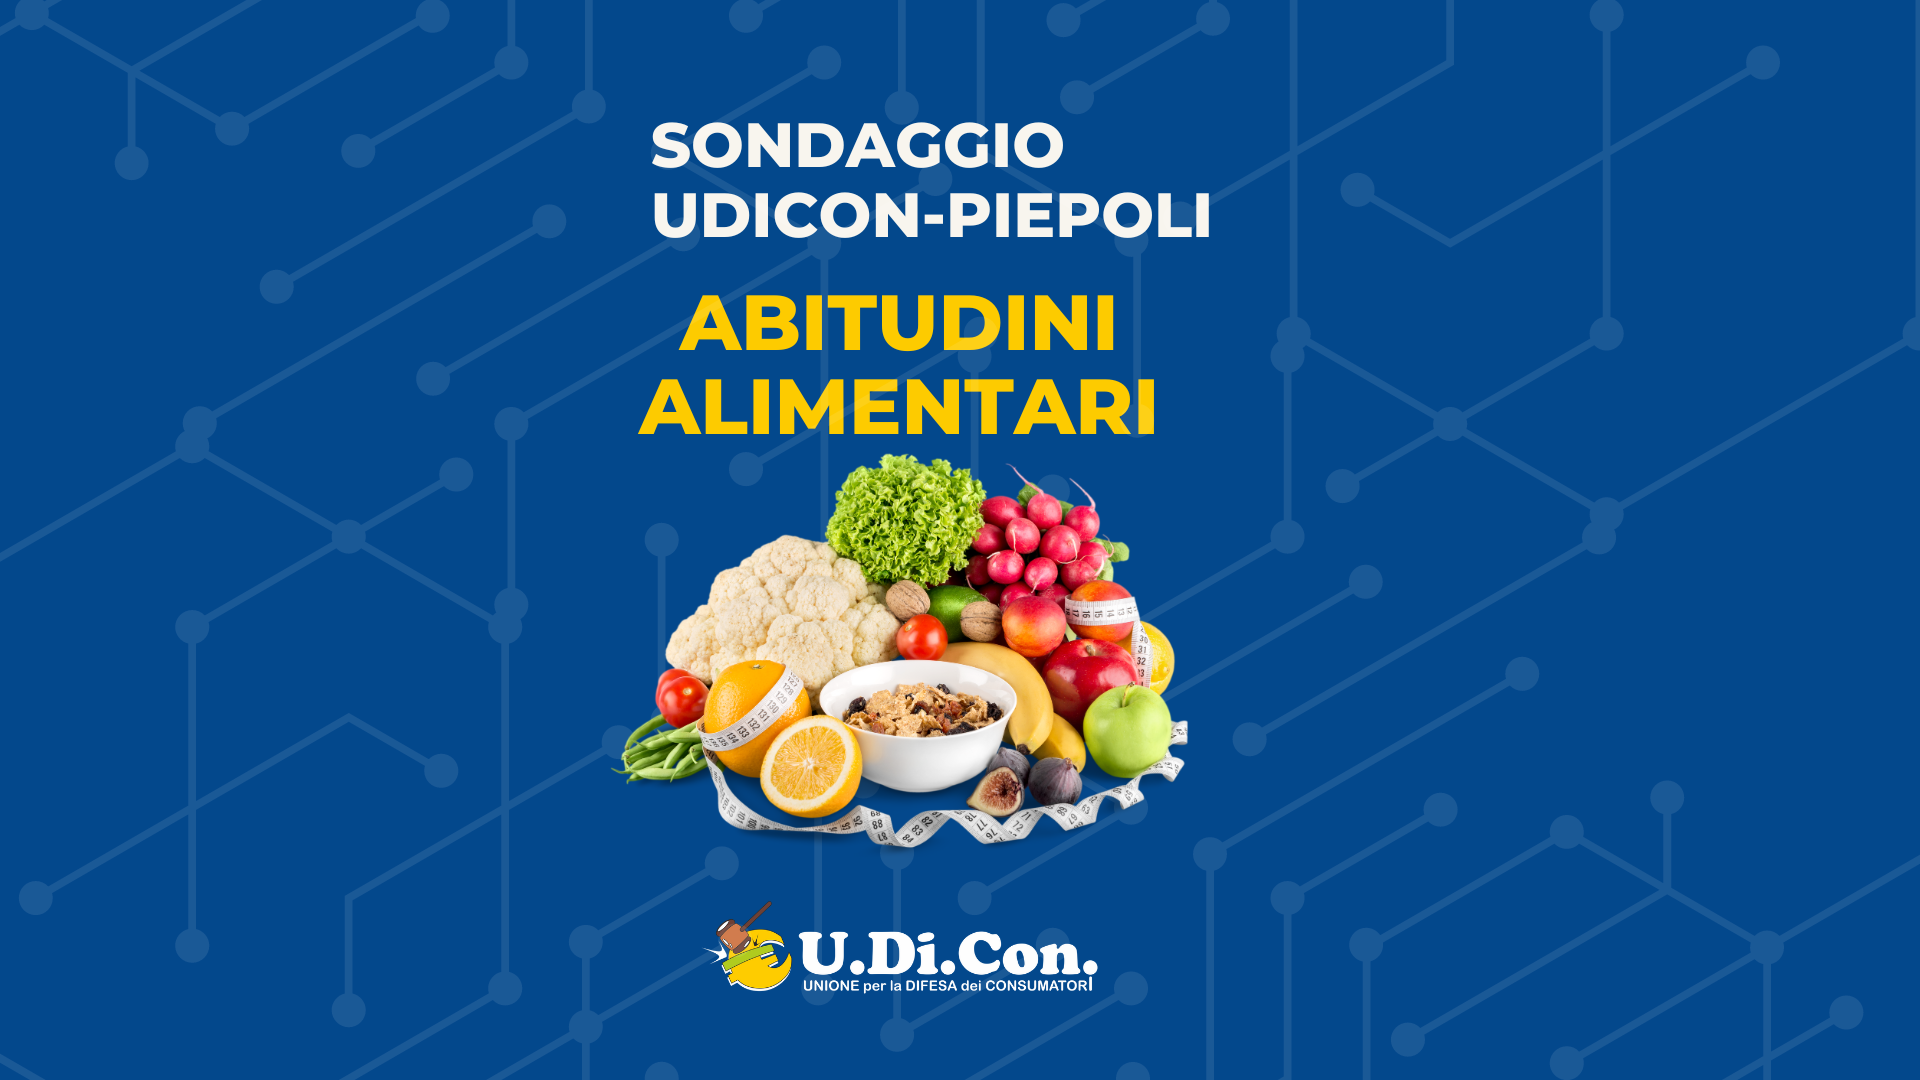 Indagine Udicon - Piepoli: abitudini alimentari, diete, disturbi e stili di vita degli italiani